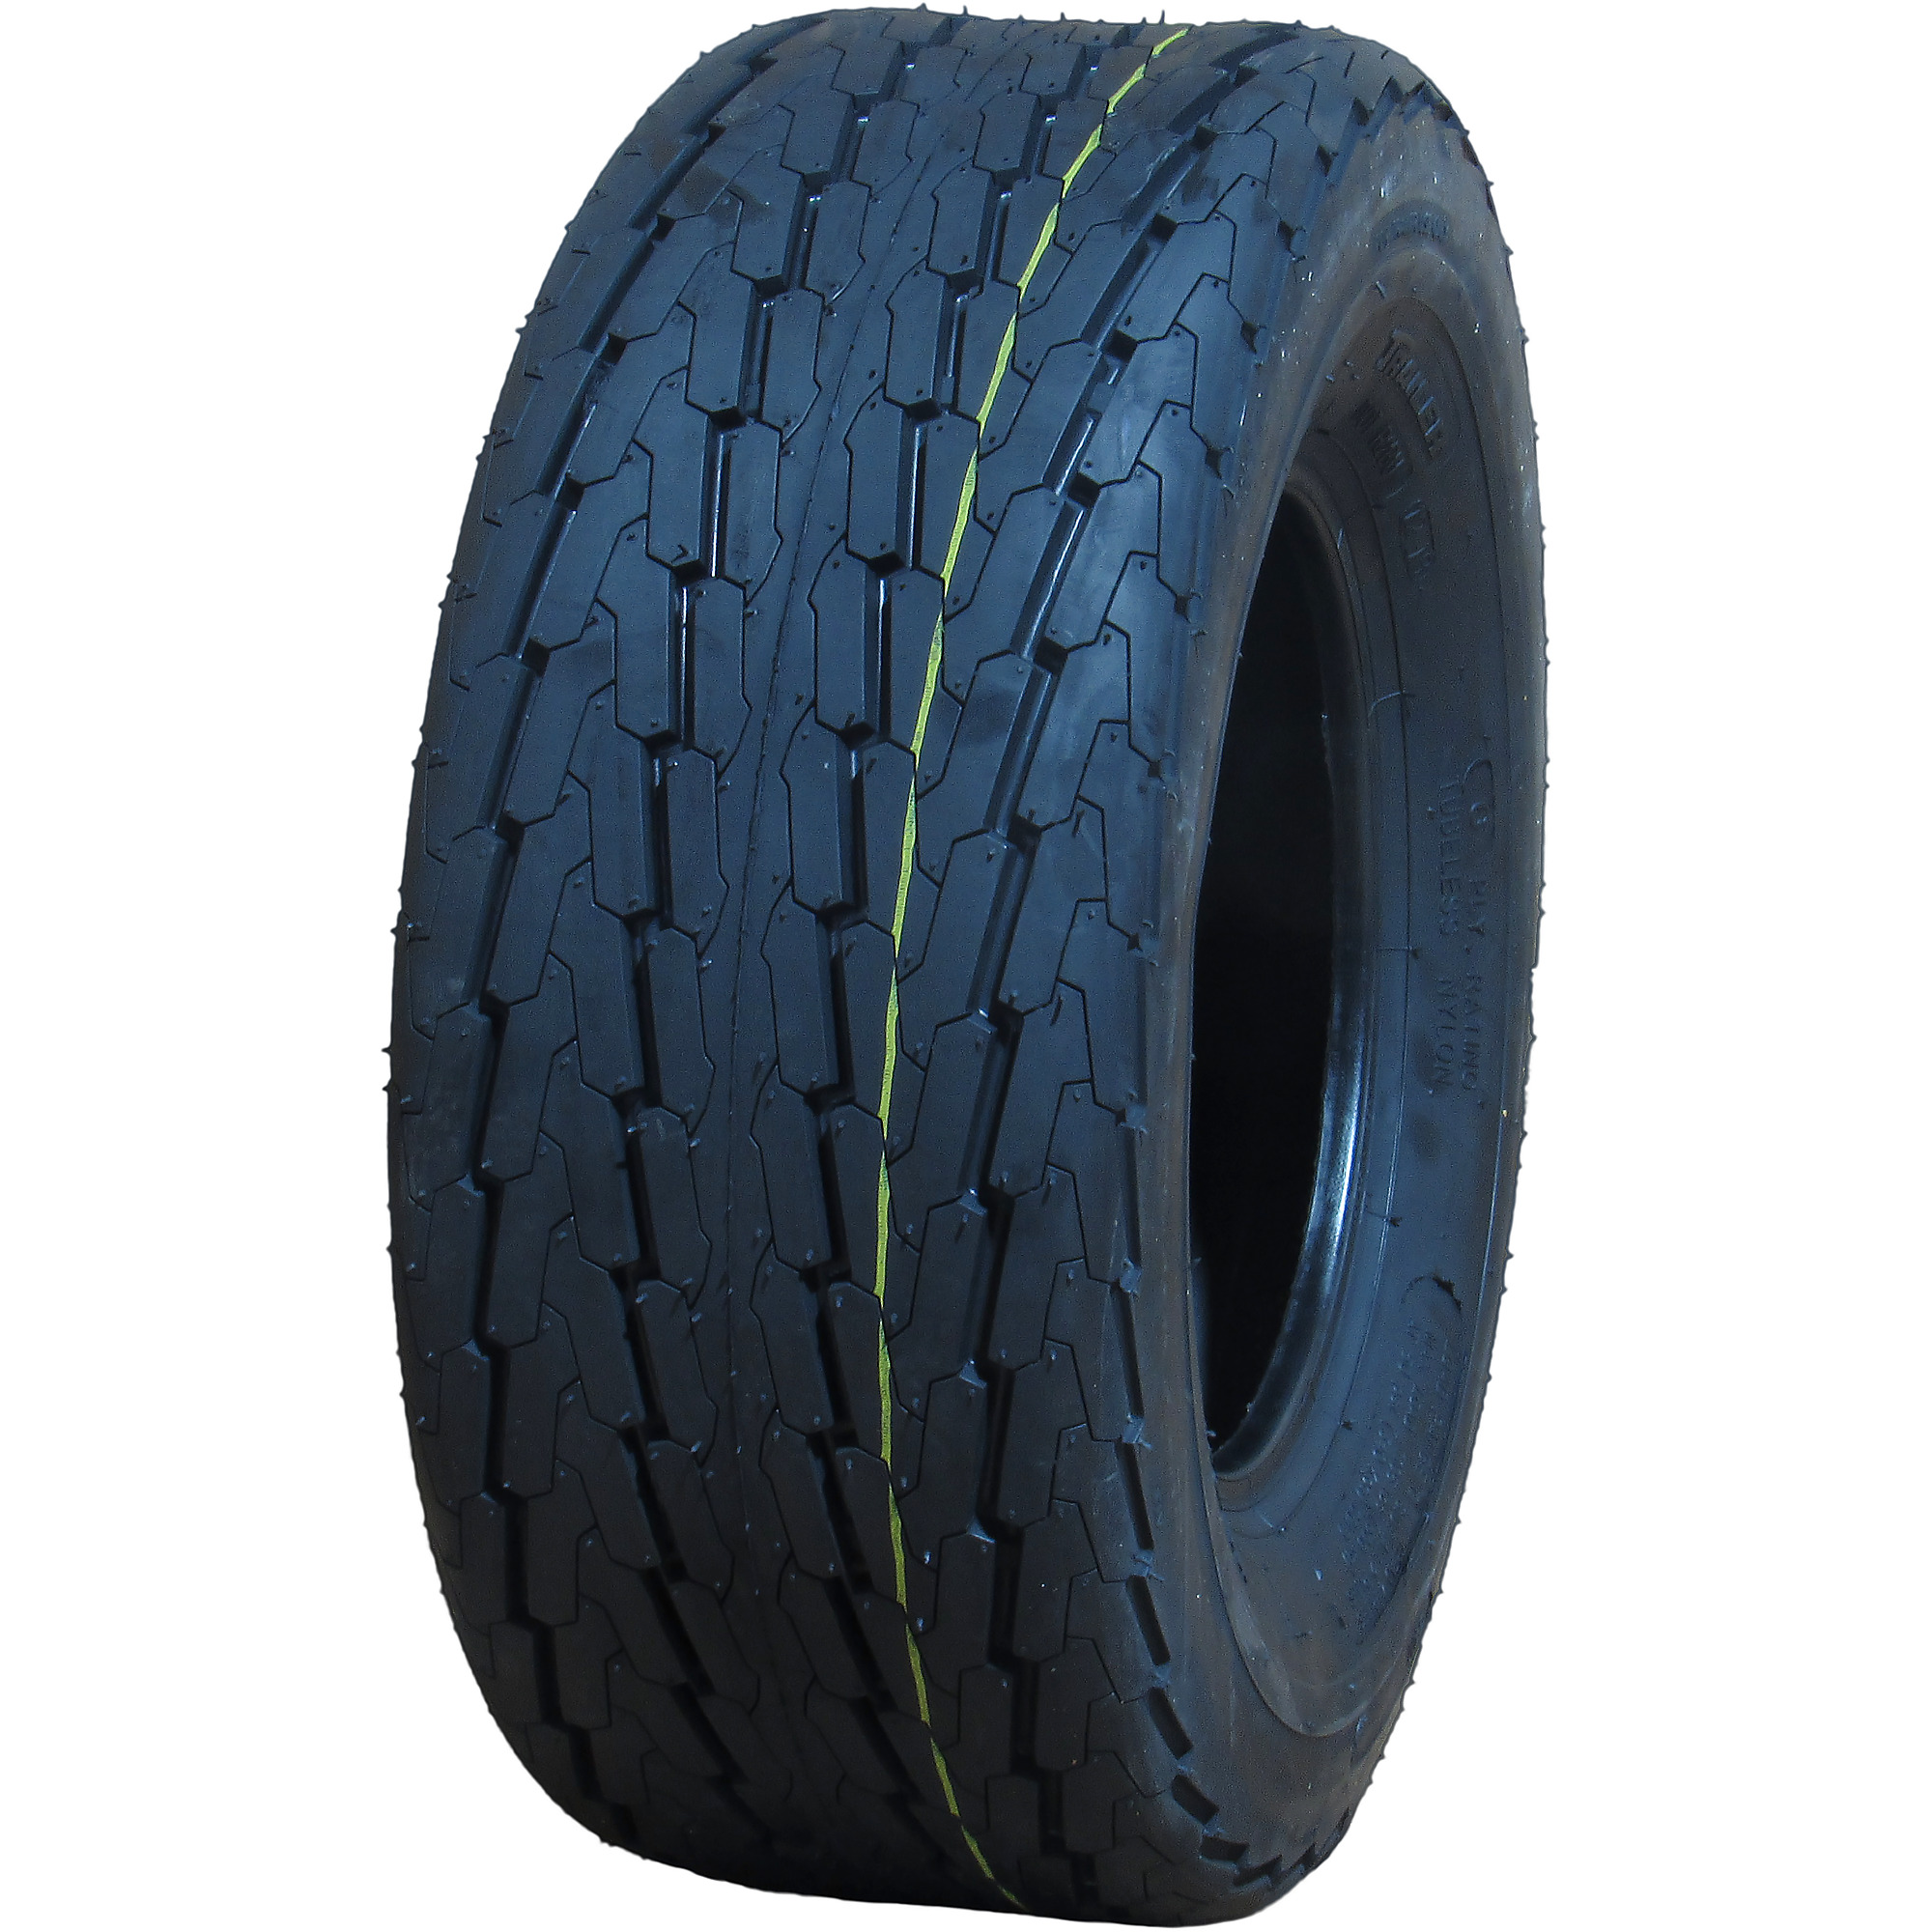 Highway Trailer Tire, Bias-ply, Tire Size 20.5X8.00-10, Load Range Rating C, Model - HI-RUN WD1020